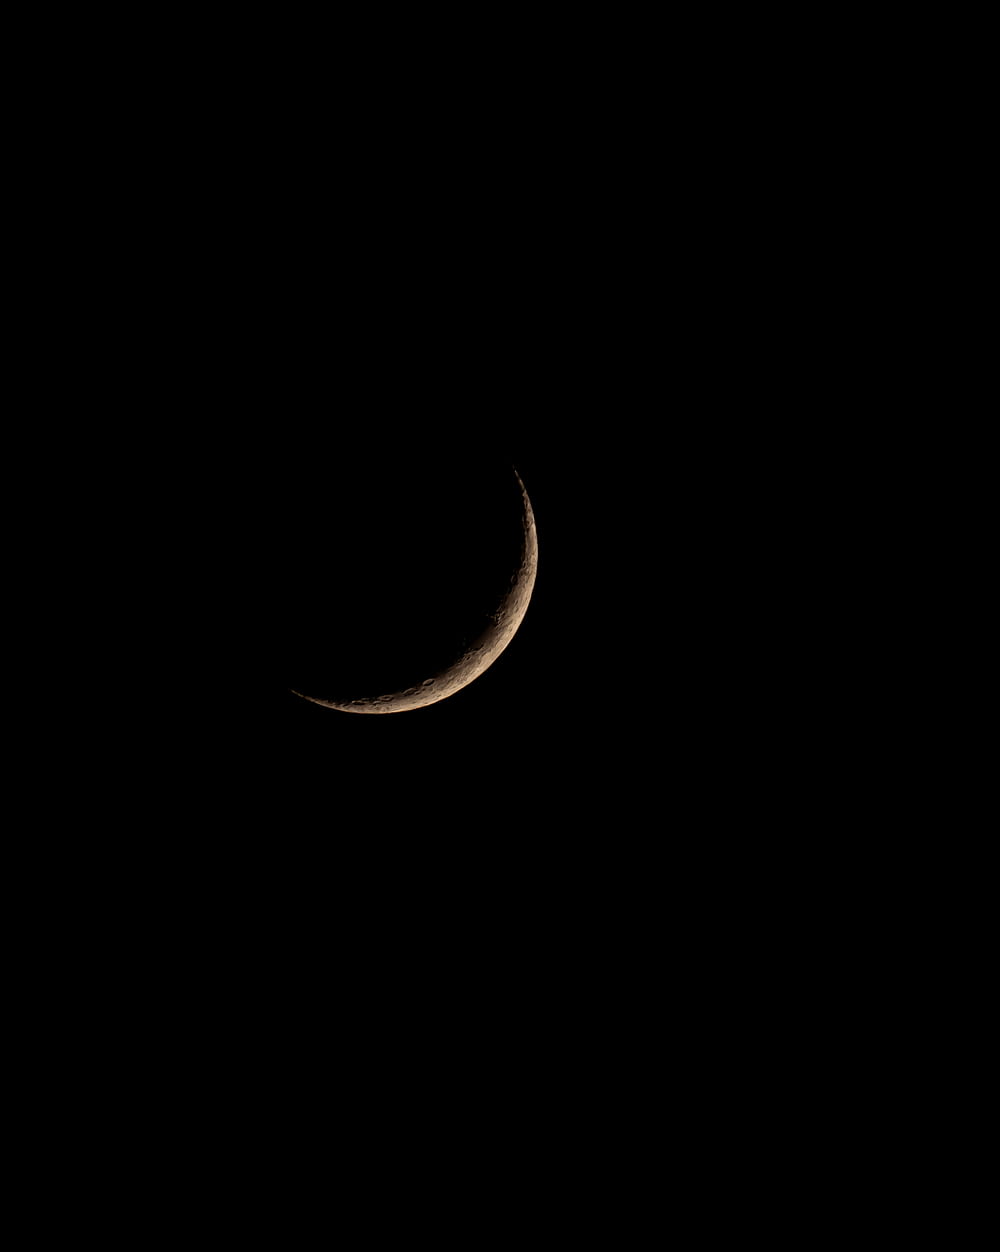 a crescent moon is seen in the dark sky